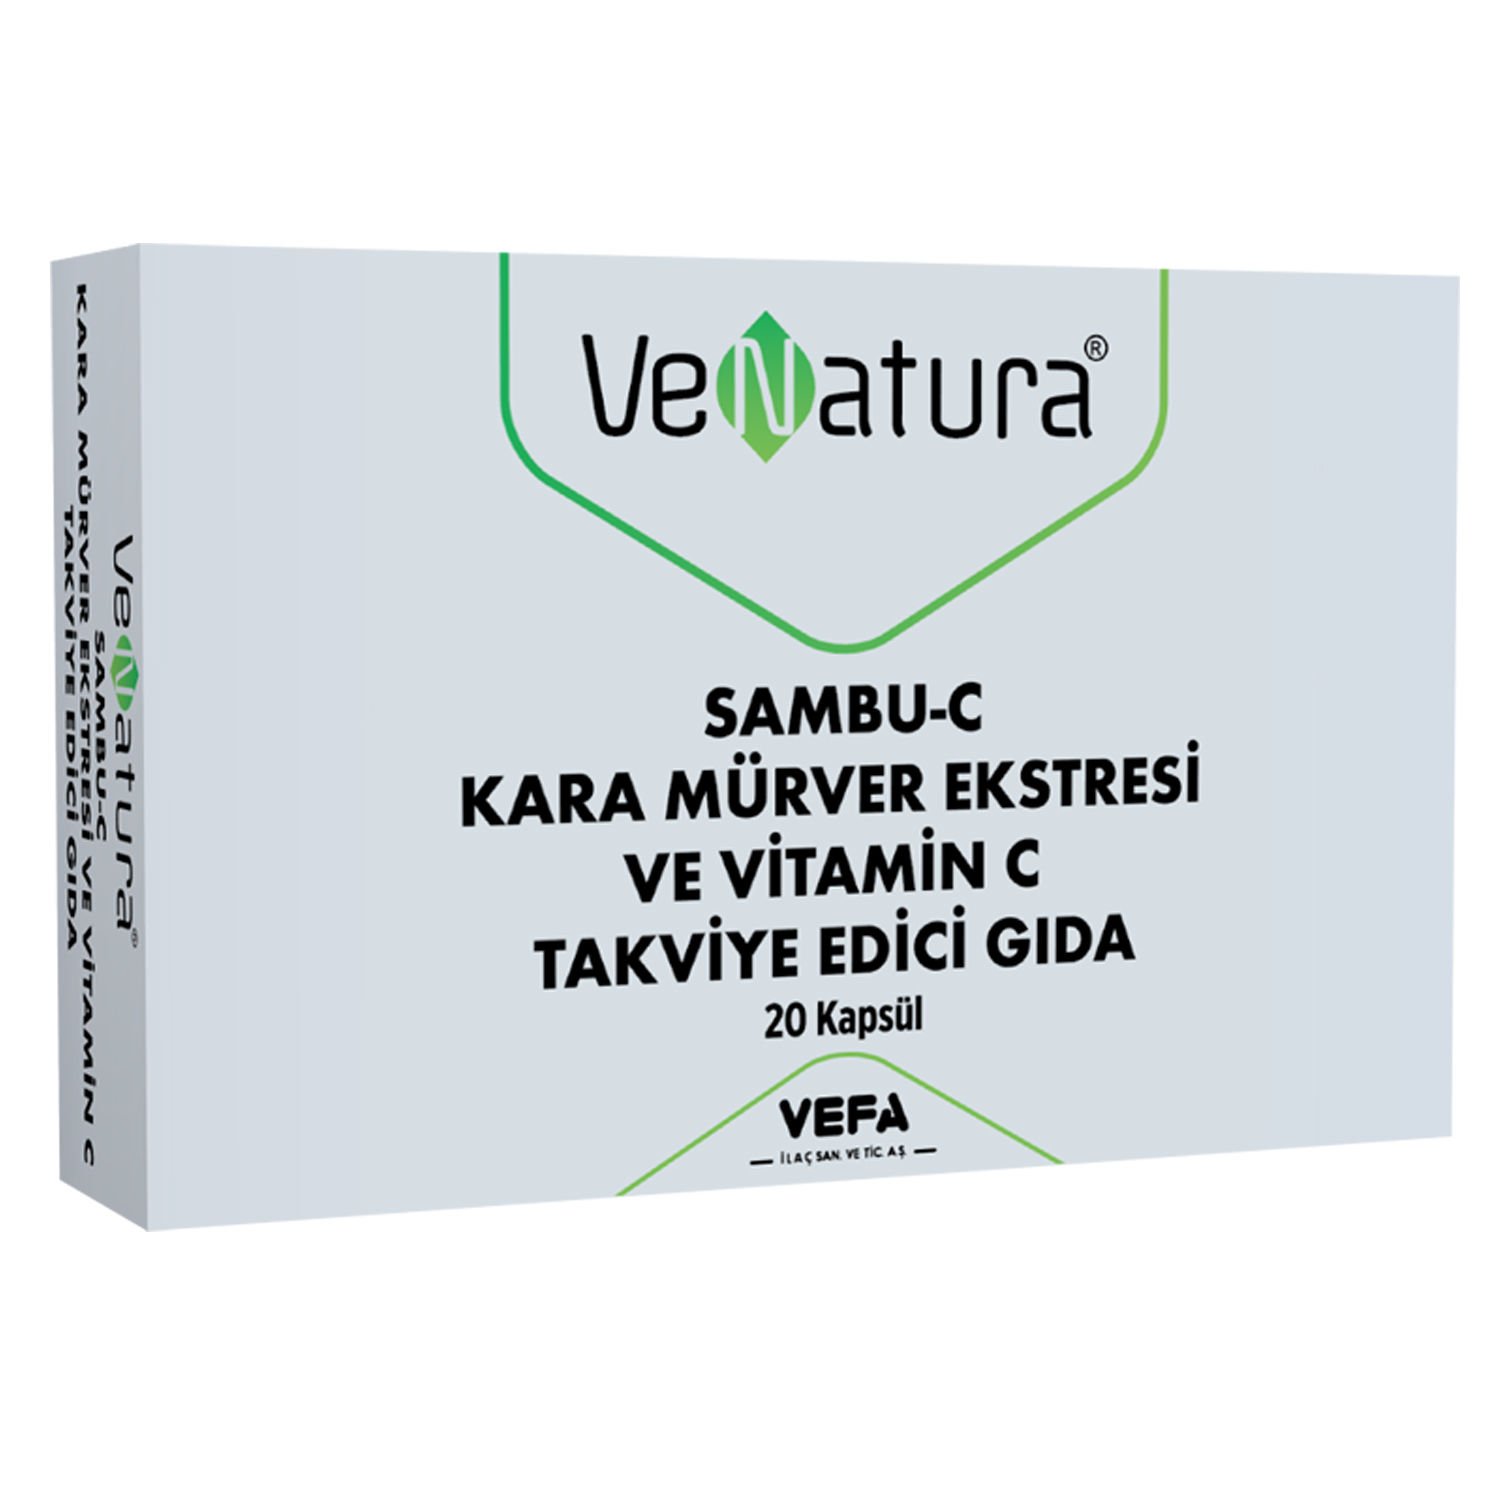 VeNatura Samcu-c Kara Mürver Ekstresi Ve Vitamin C 20 Kapsül